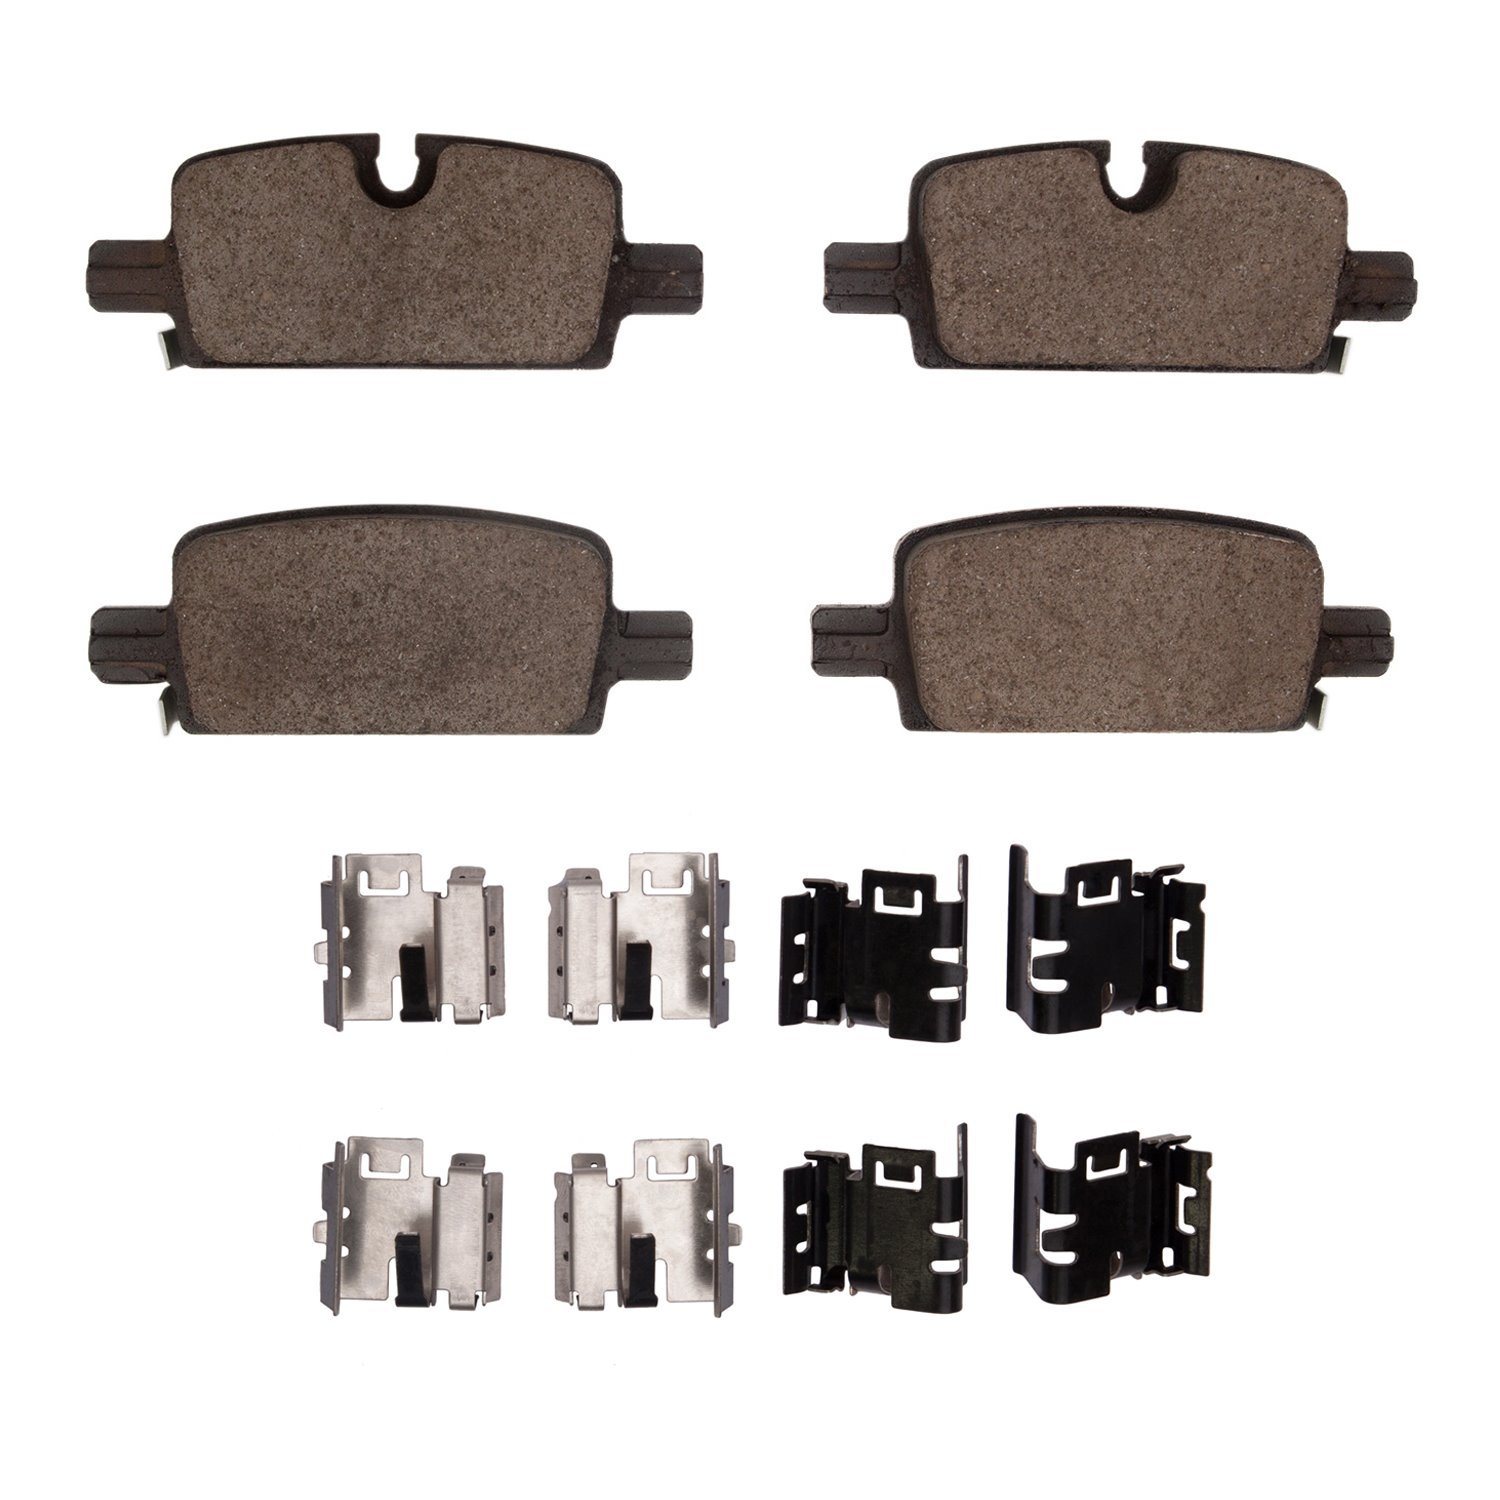 1552-2174-01 5000 Advanced Low-Metallic Brake Pads & Hardware Kit, Fits Select GM, Position: Rear